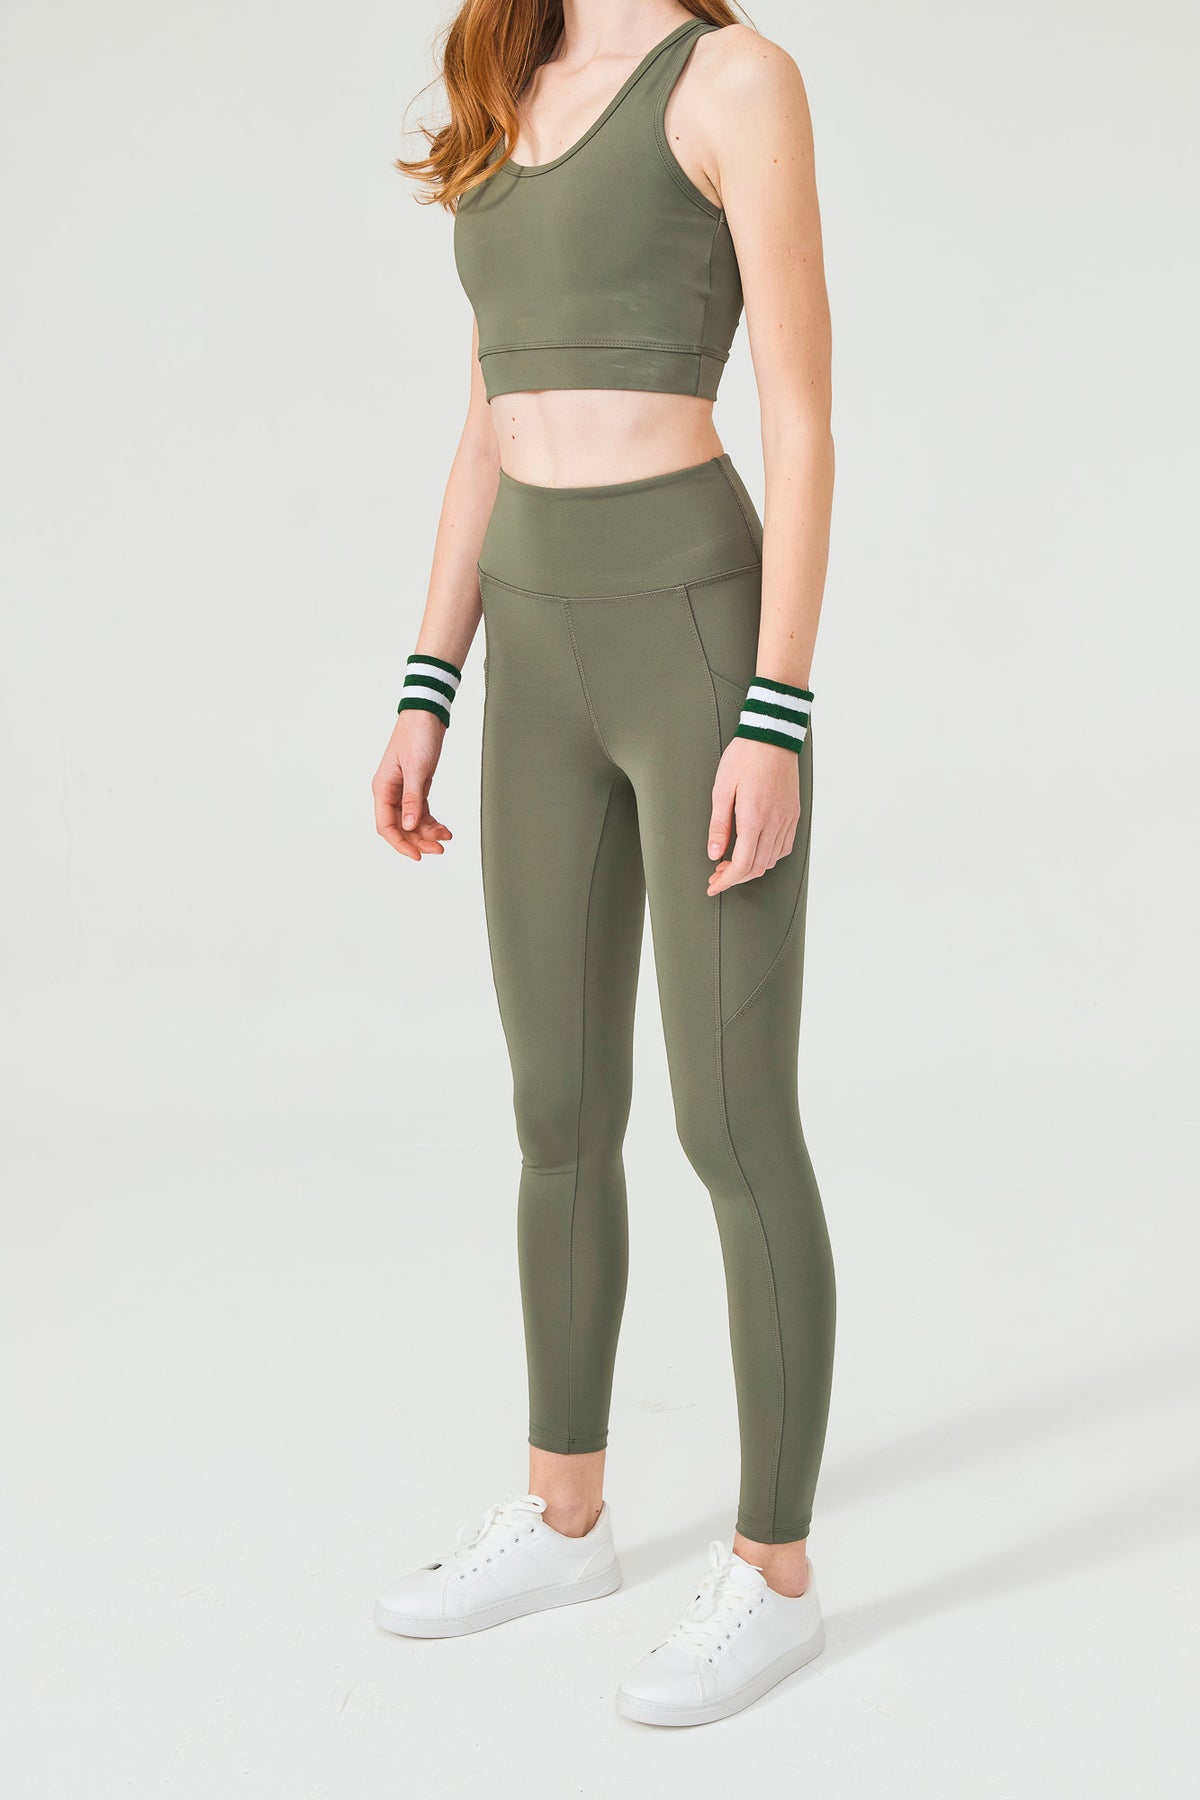 Green Seamless Top And Shorts Activewear Set